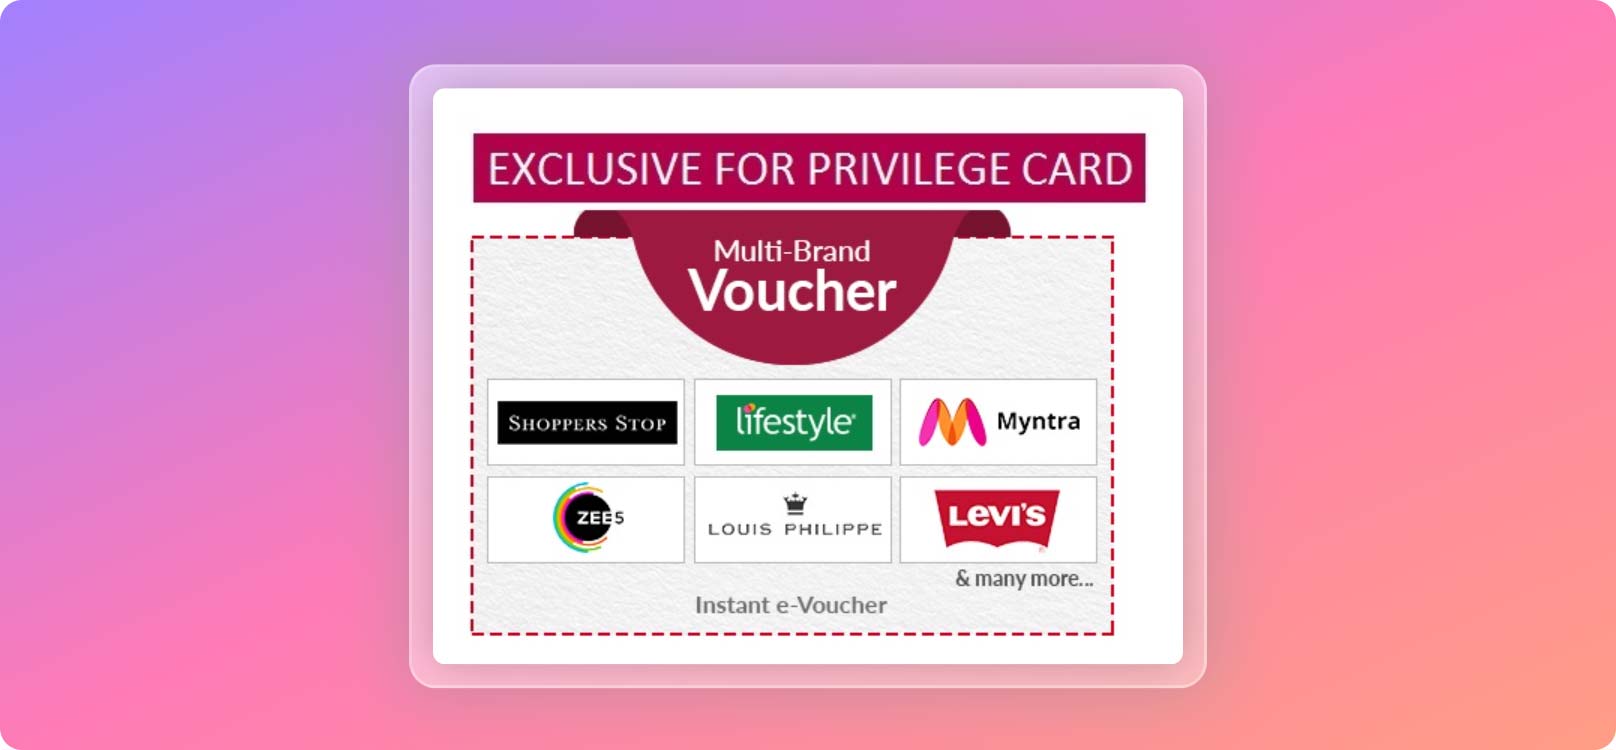 Axis Multi-brand voucher redemption option for Privilege Card